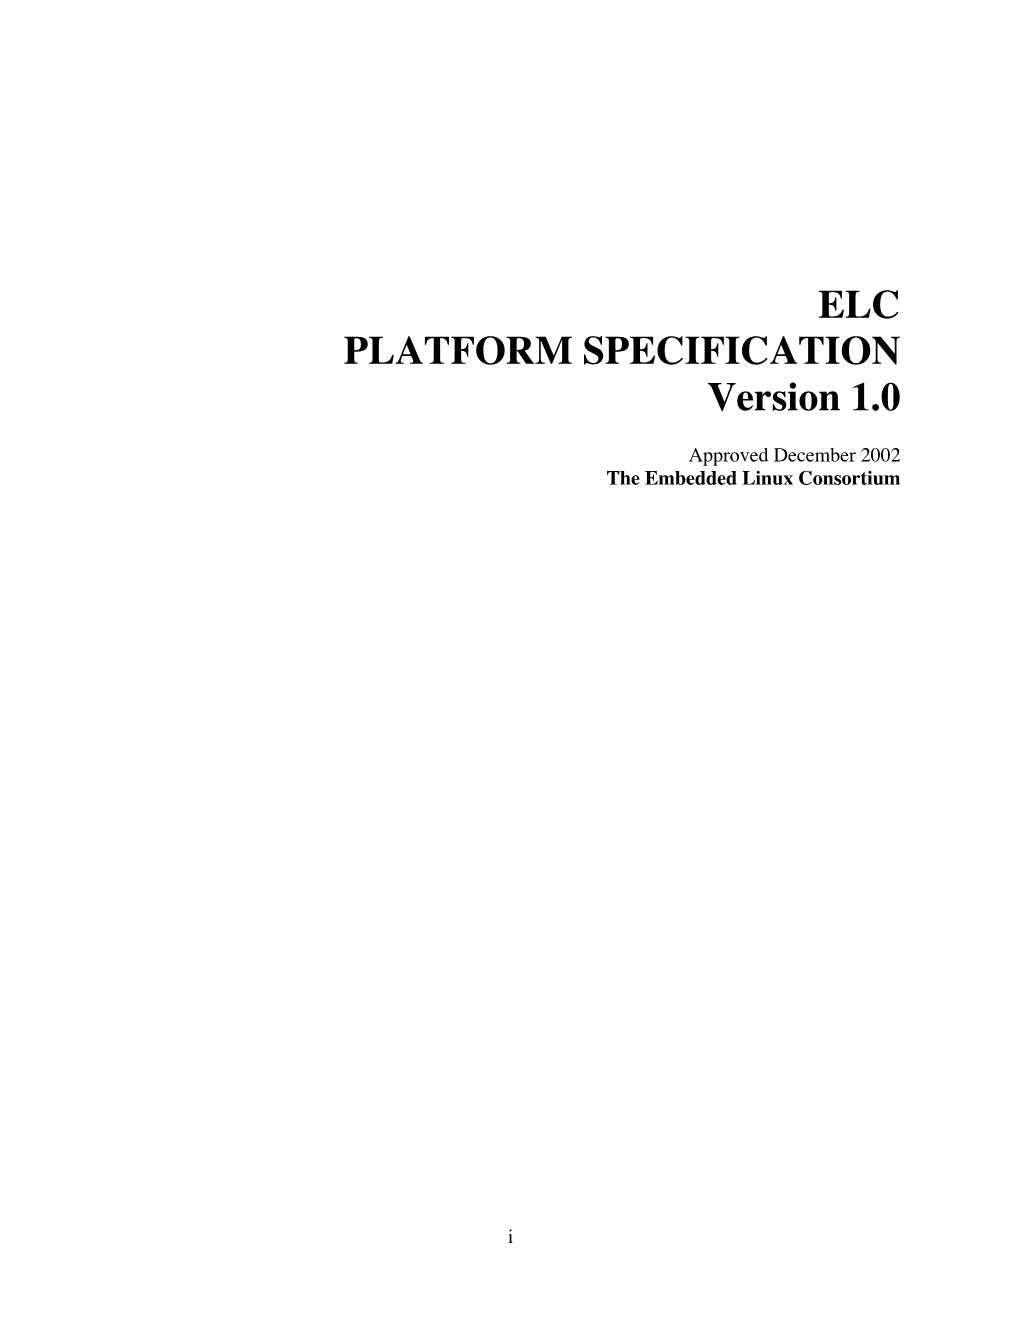 ELC PLATFORM SPECIFICATION Version 1.0